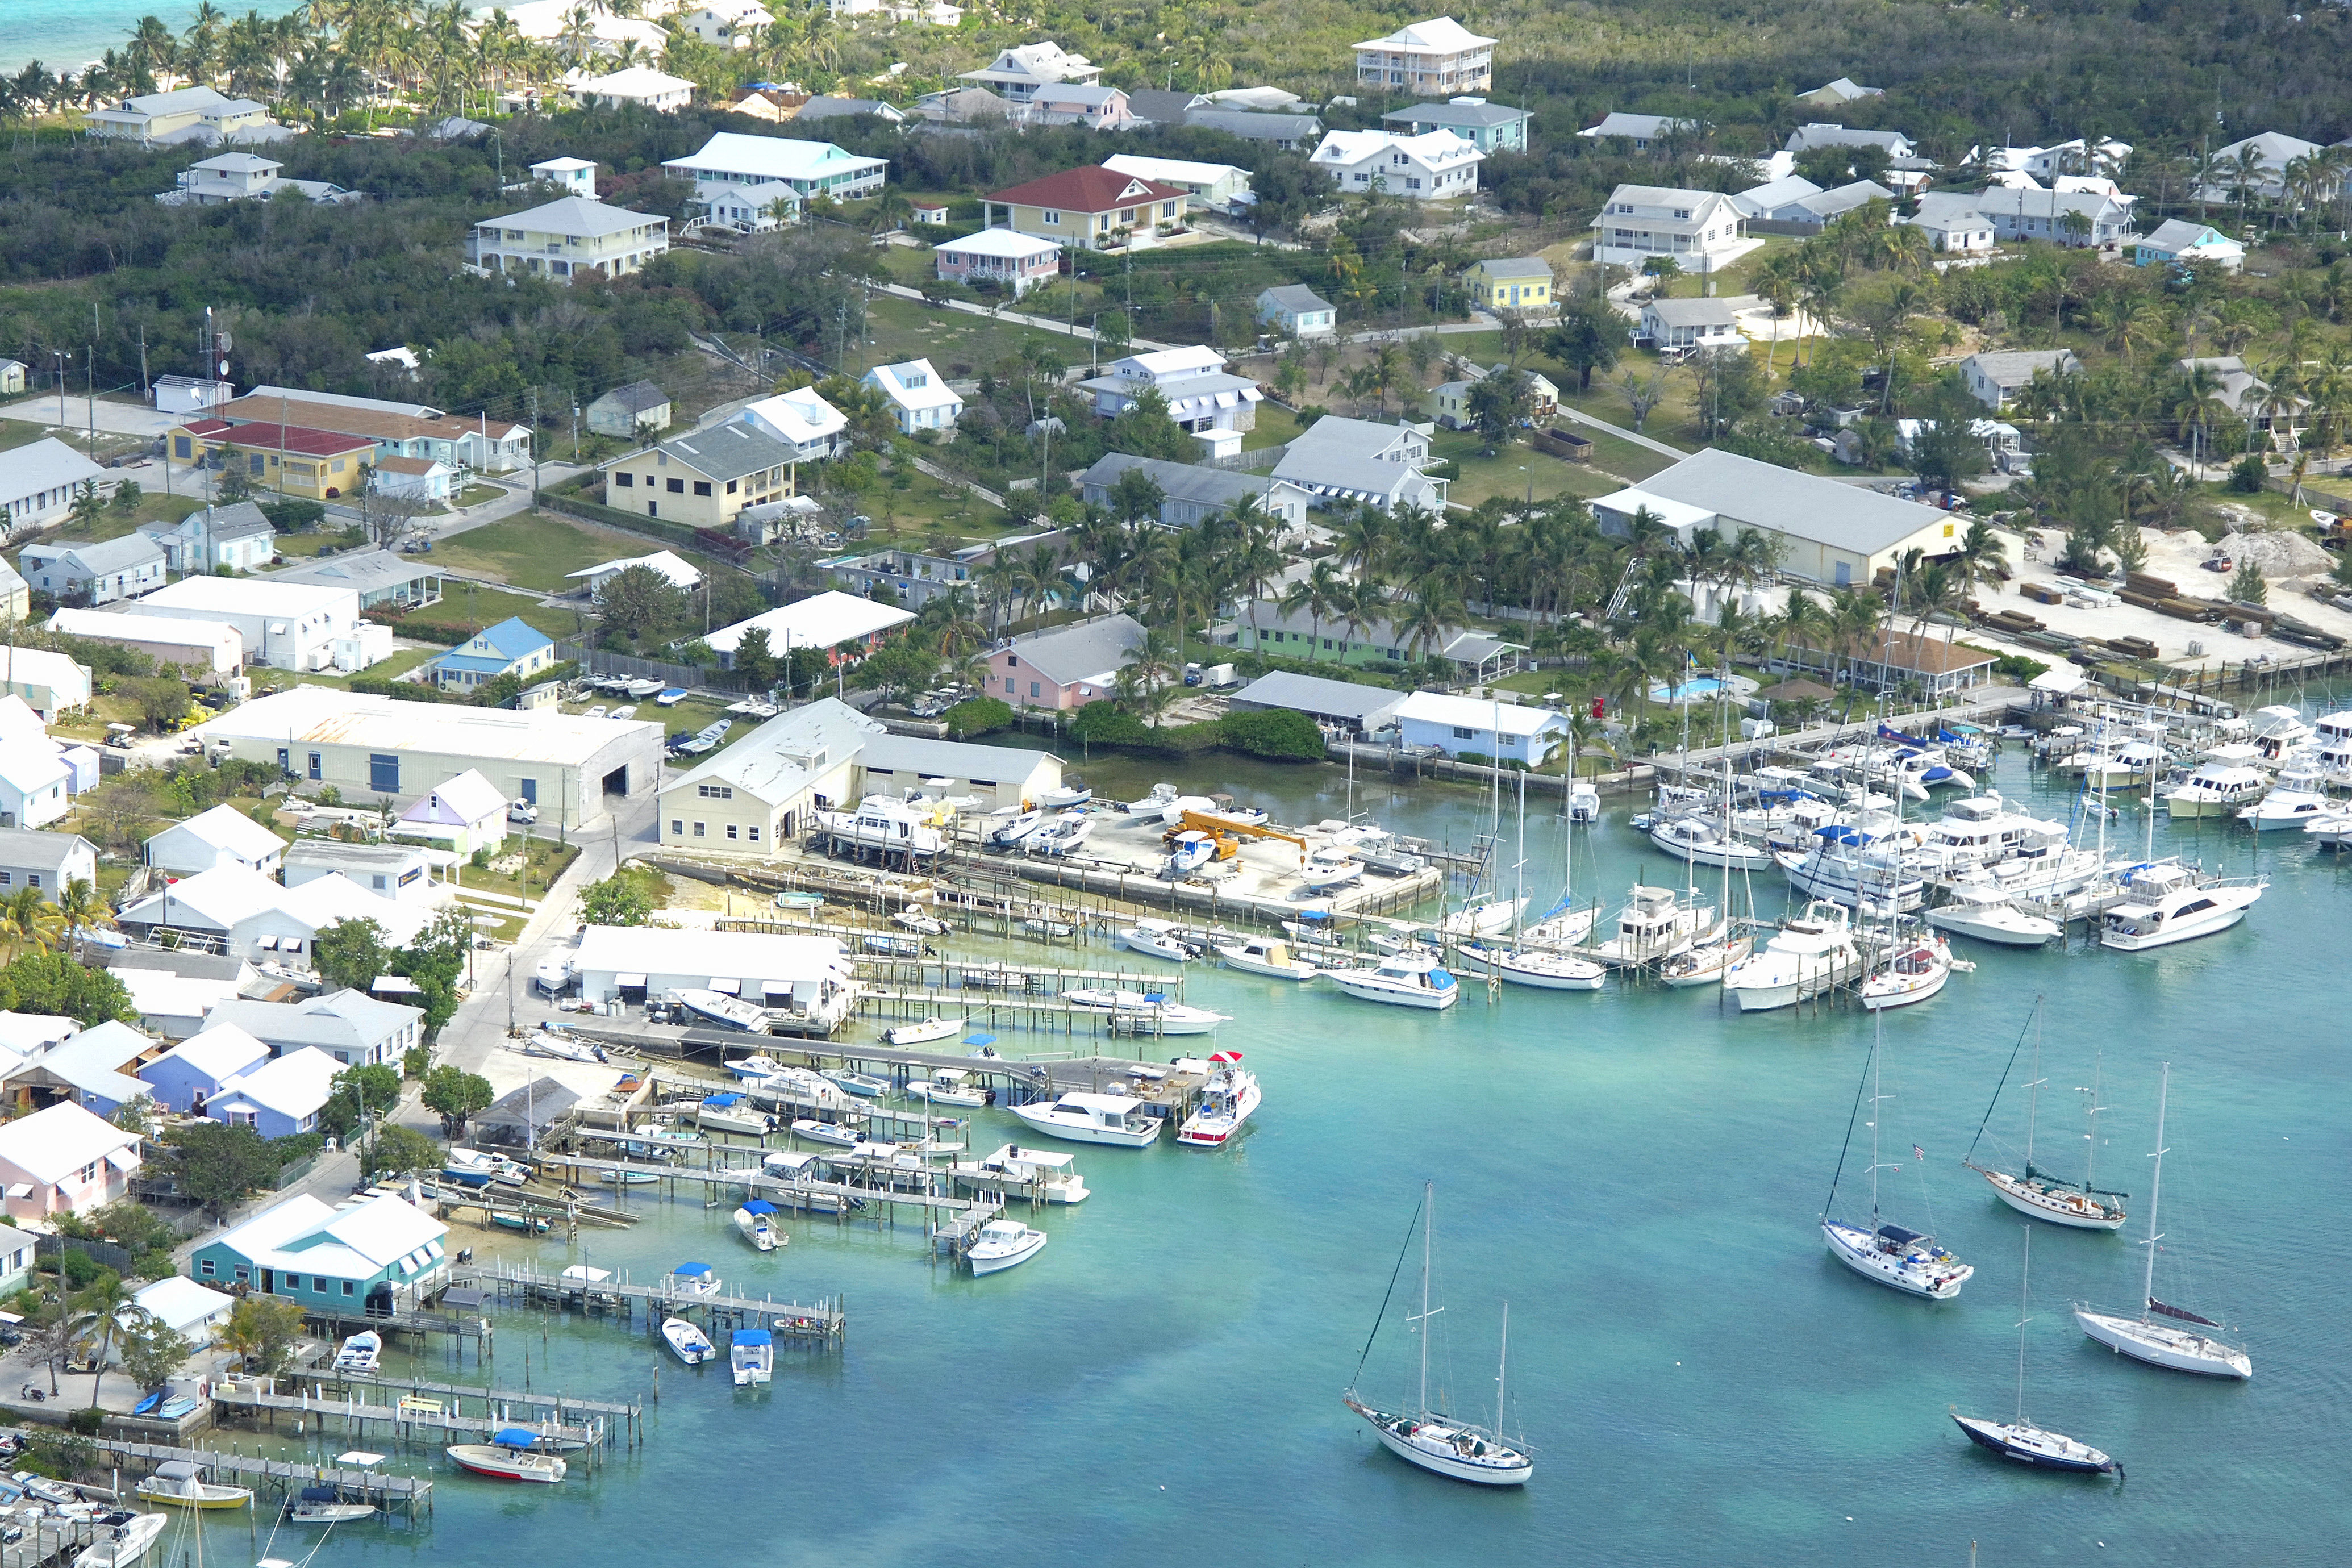 Edwin's Boat Yard #2 in Man-O-War Cay, AB, Bahamas - Marina Reviews ...